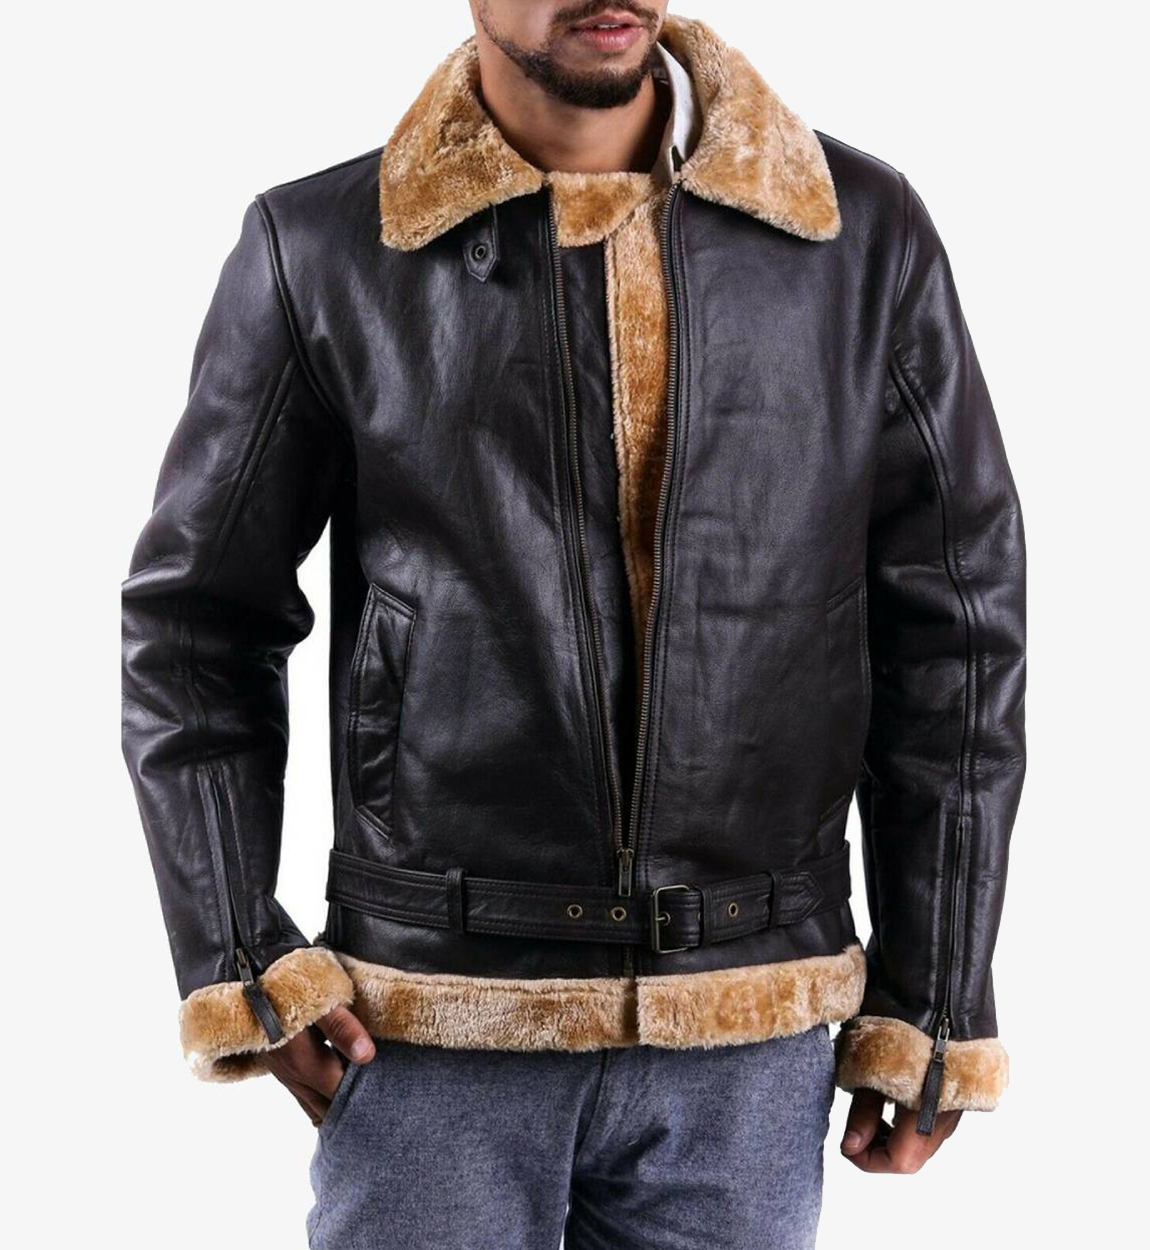 Buy #1 Quality Bomber Leather Jacket For Men